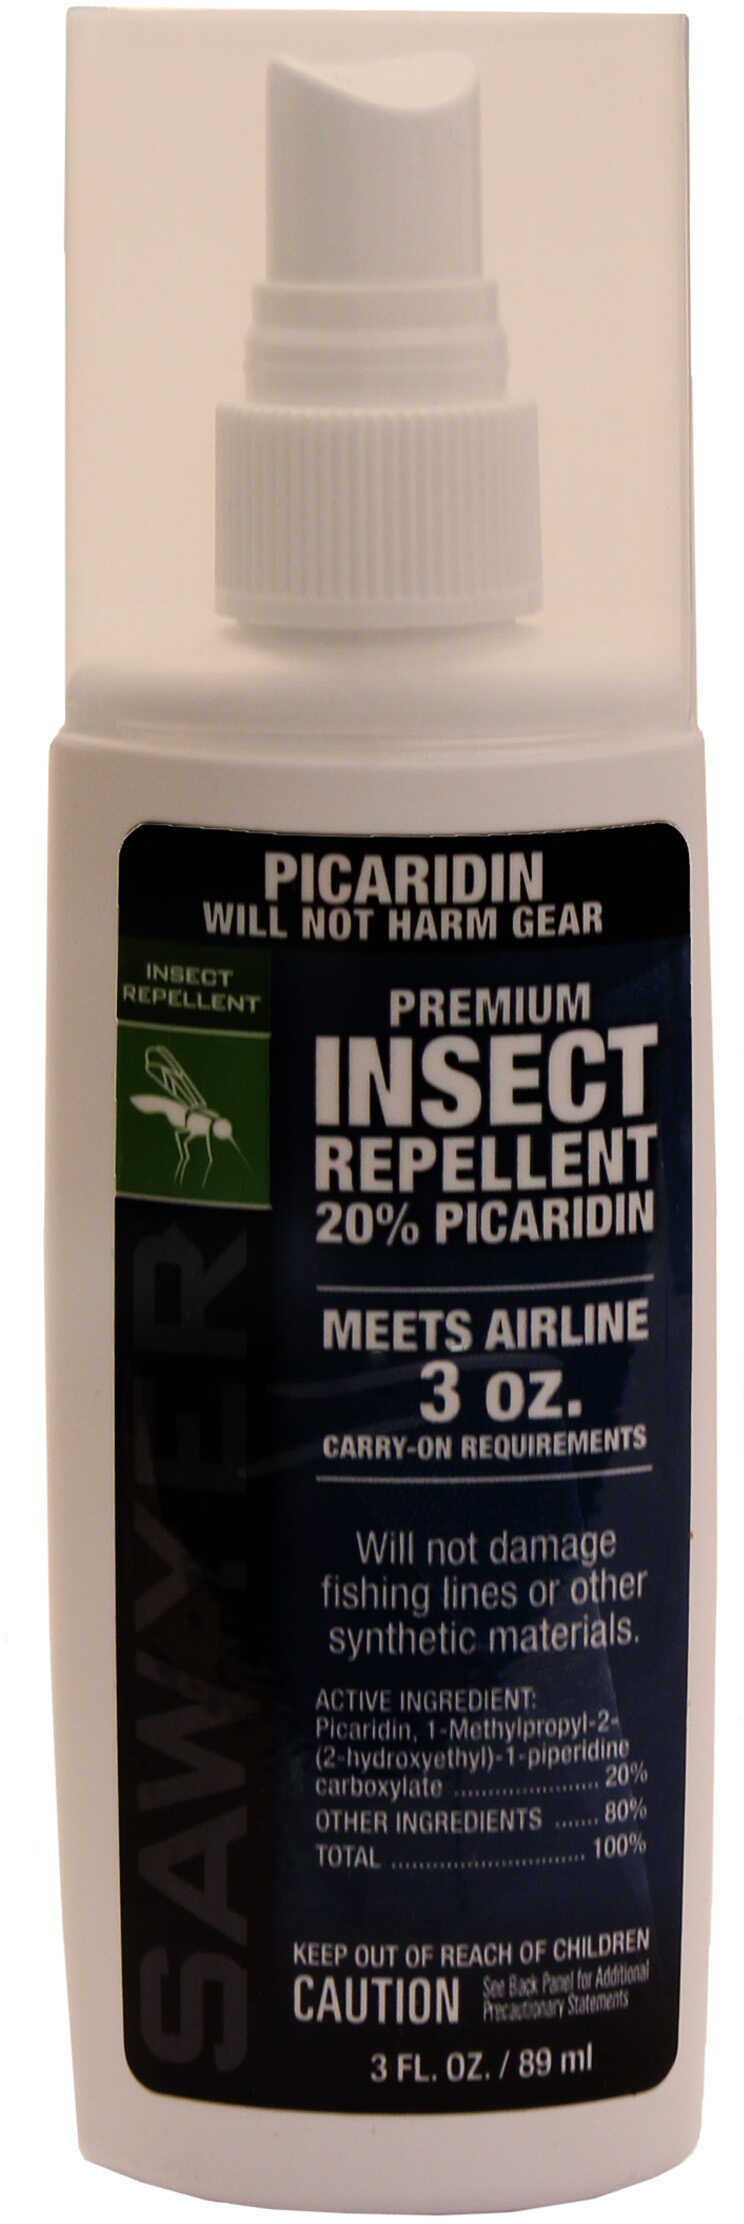 Heat Factory Sawyer Premium Insect Repellent 20% Picaridin 3oz. 39601